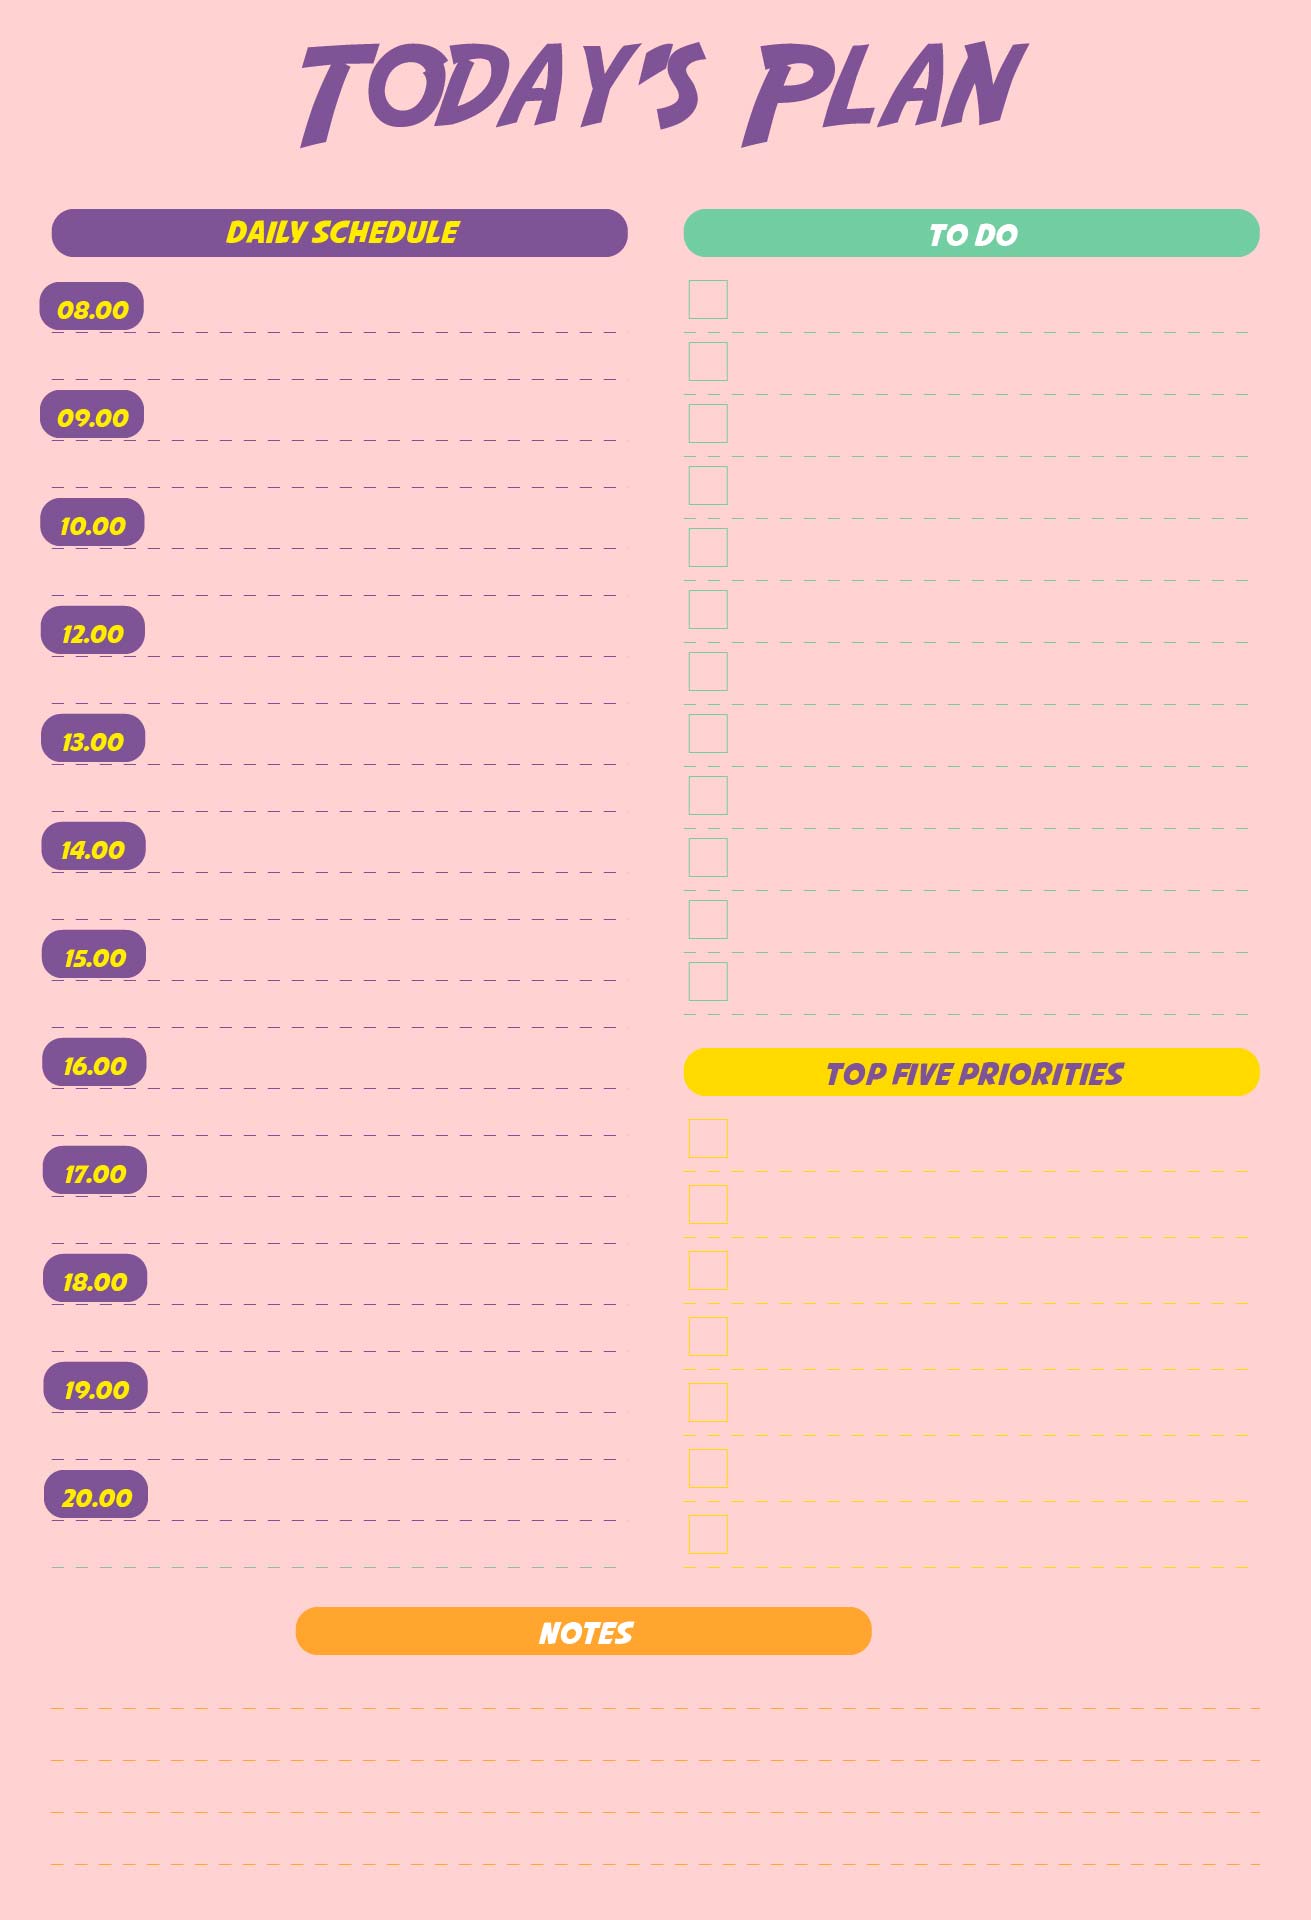 Printable Hourly Schedule Planner